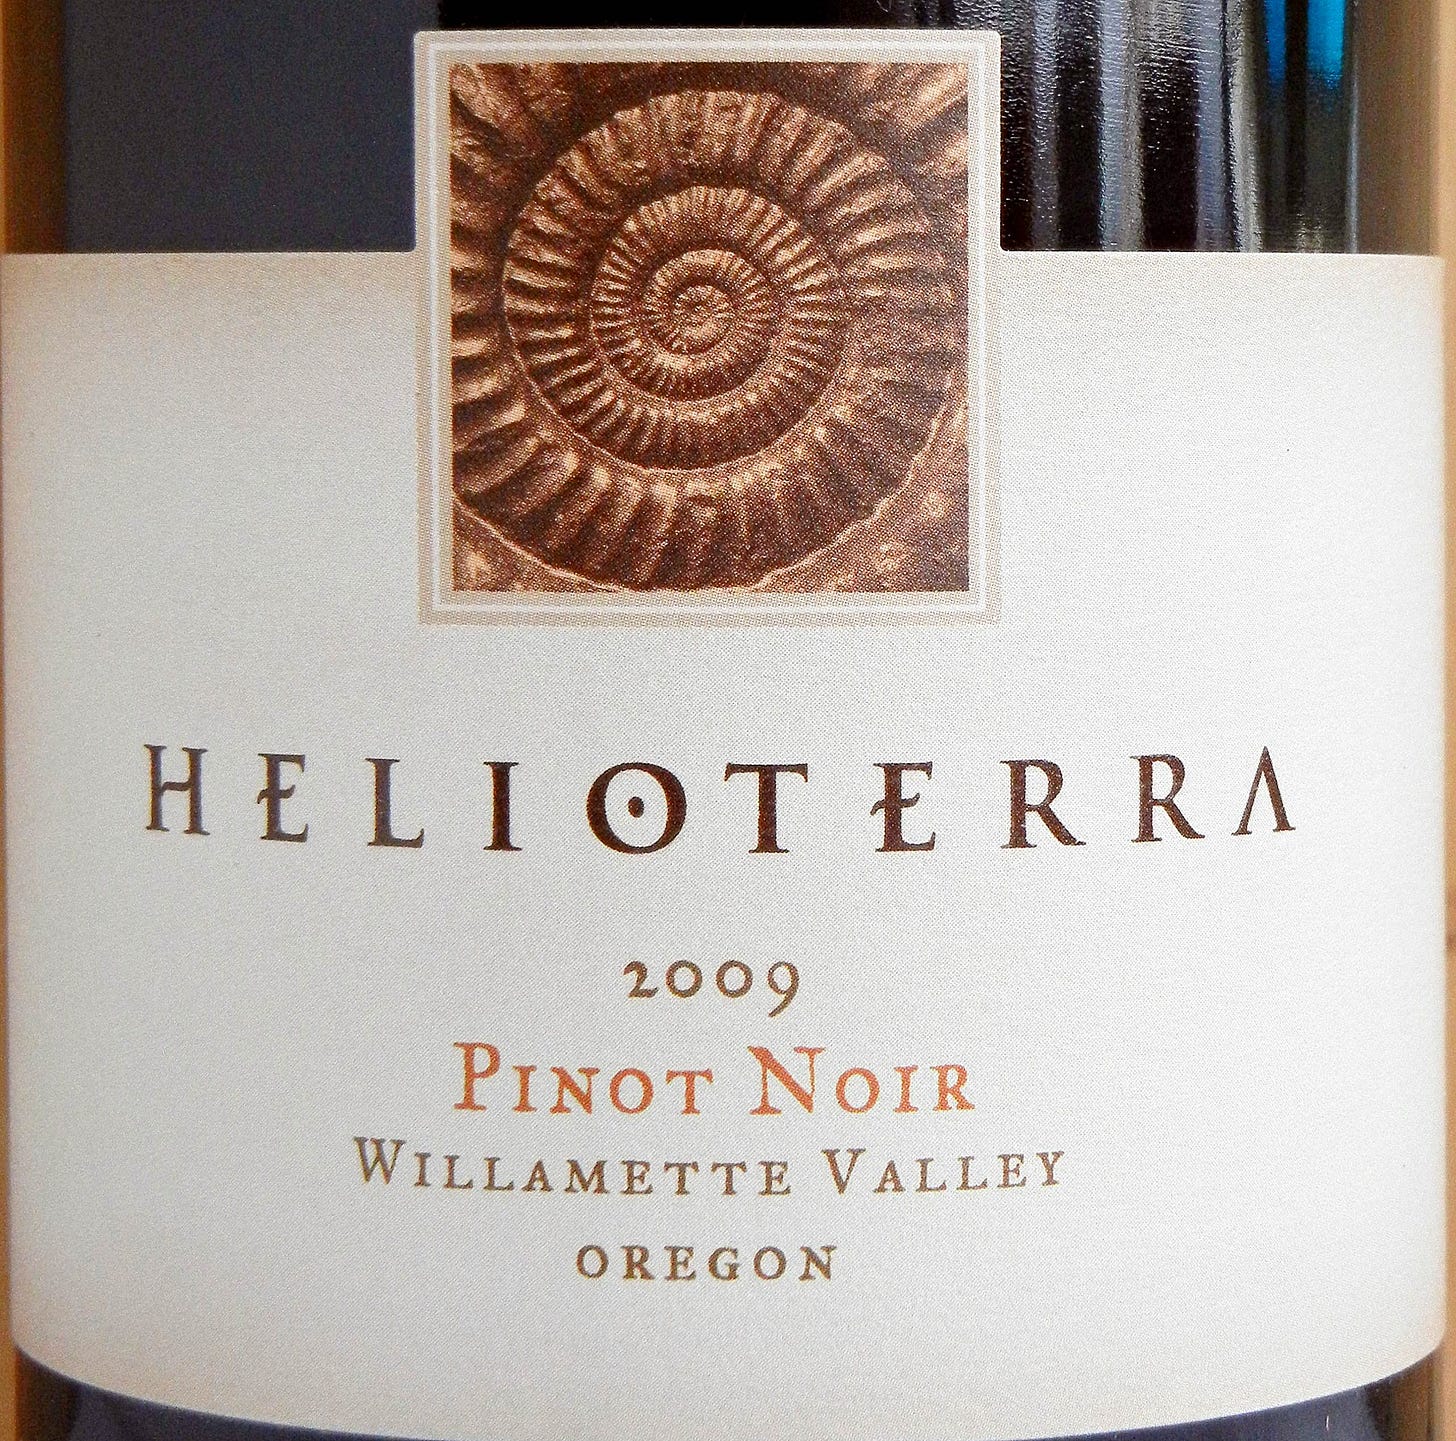 Helioterra Willamette Valley Pinot Noir 2009 Label - BC Pinot Noir Tasting Review 26